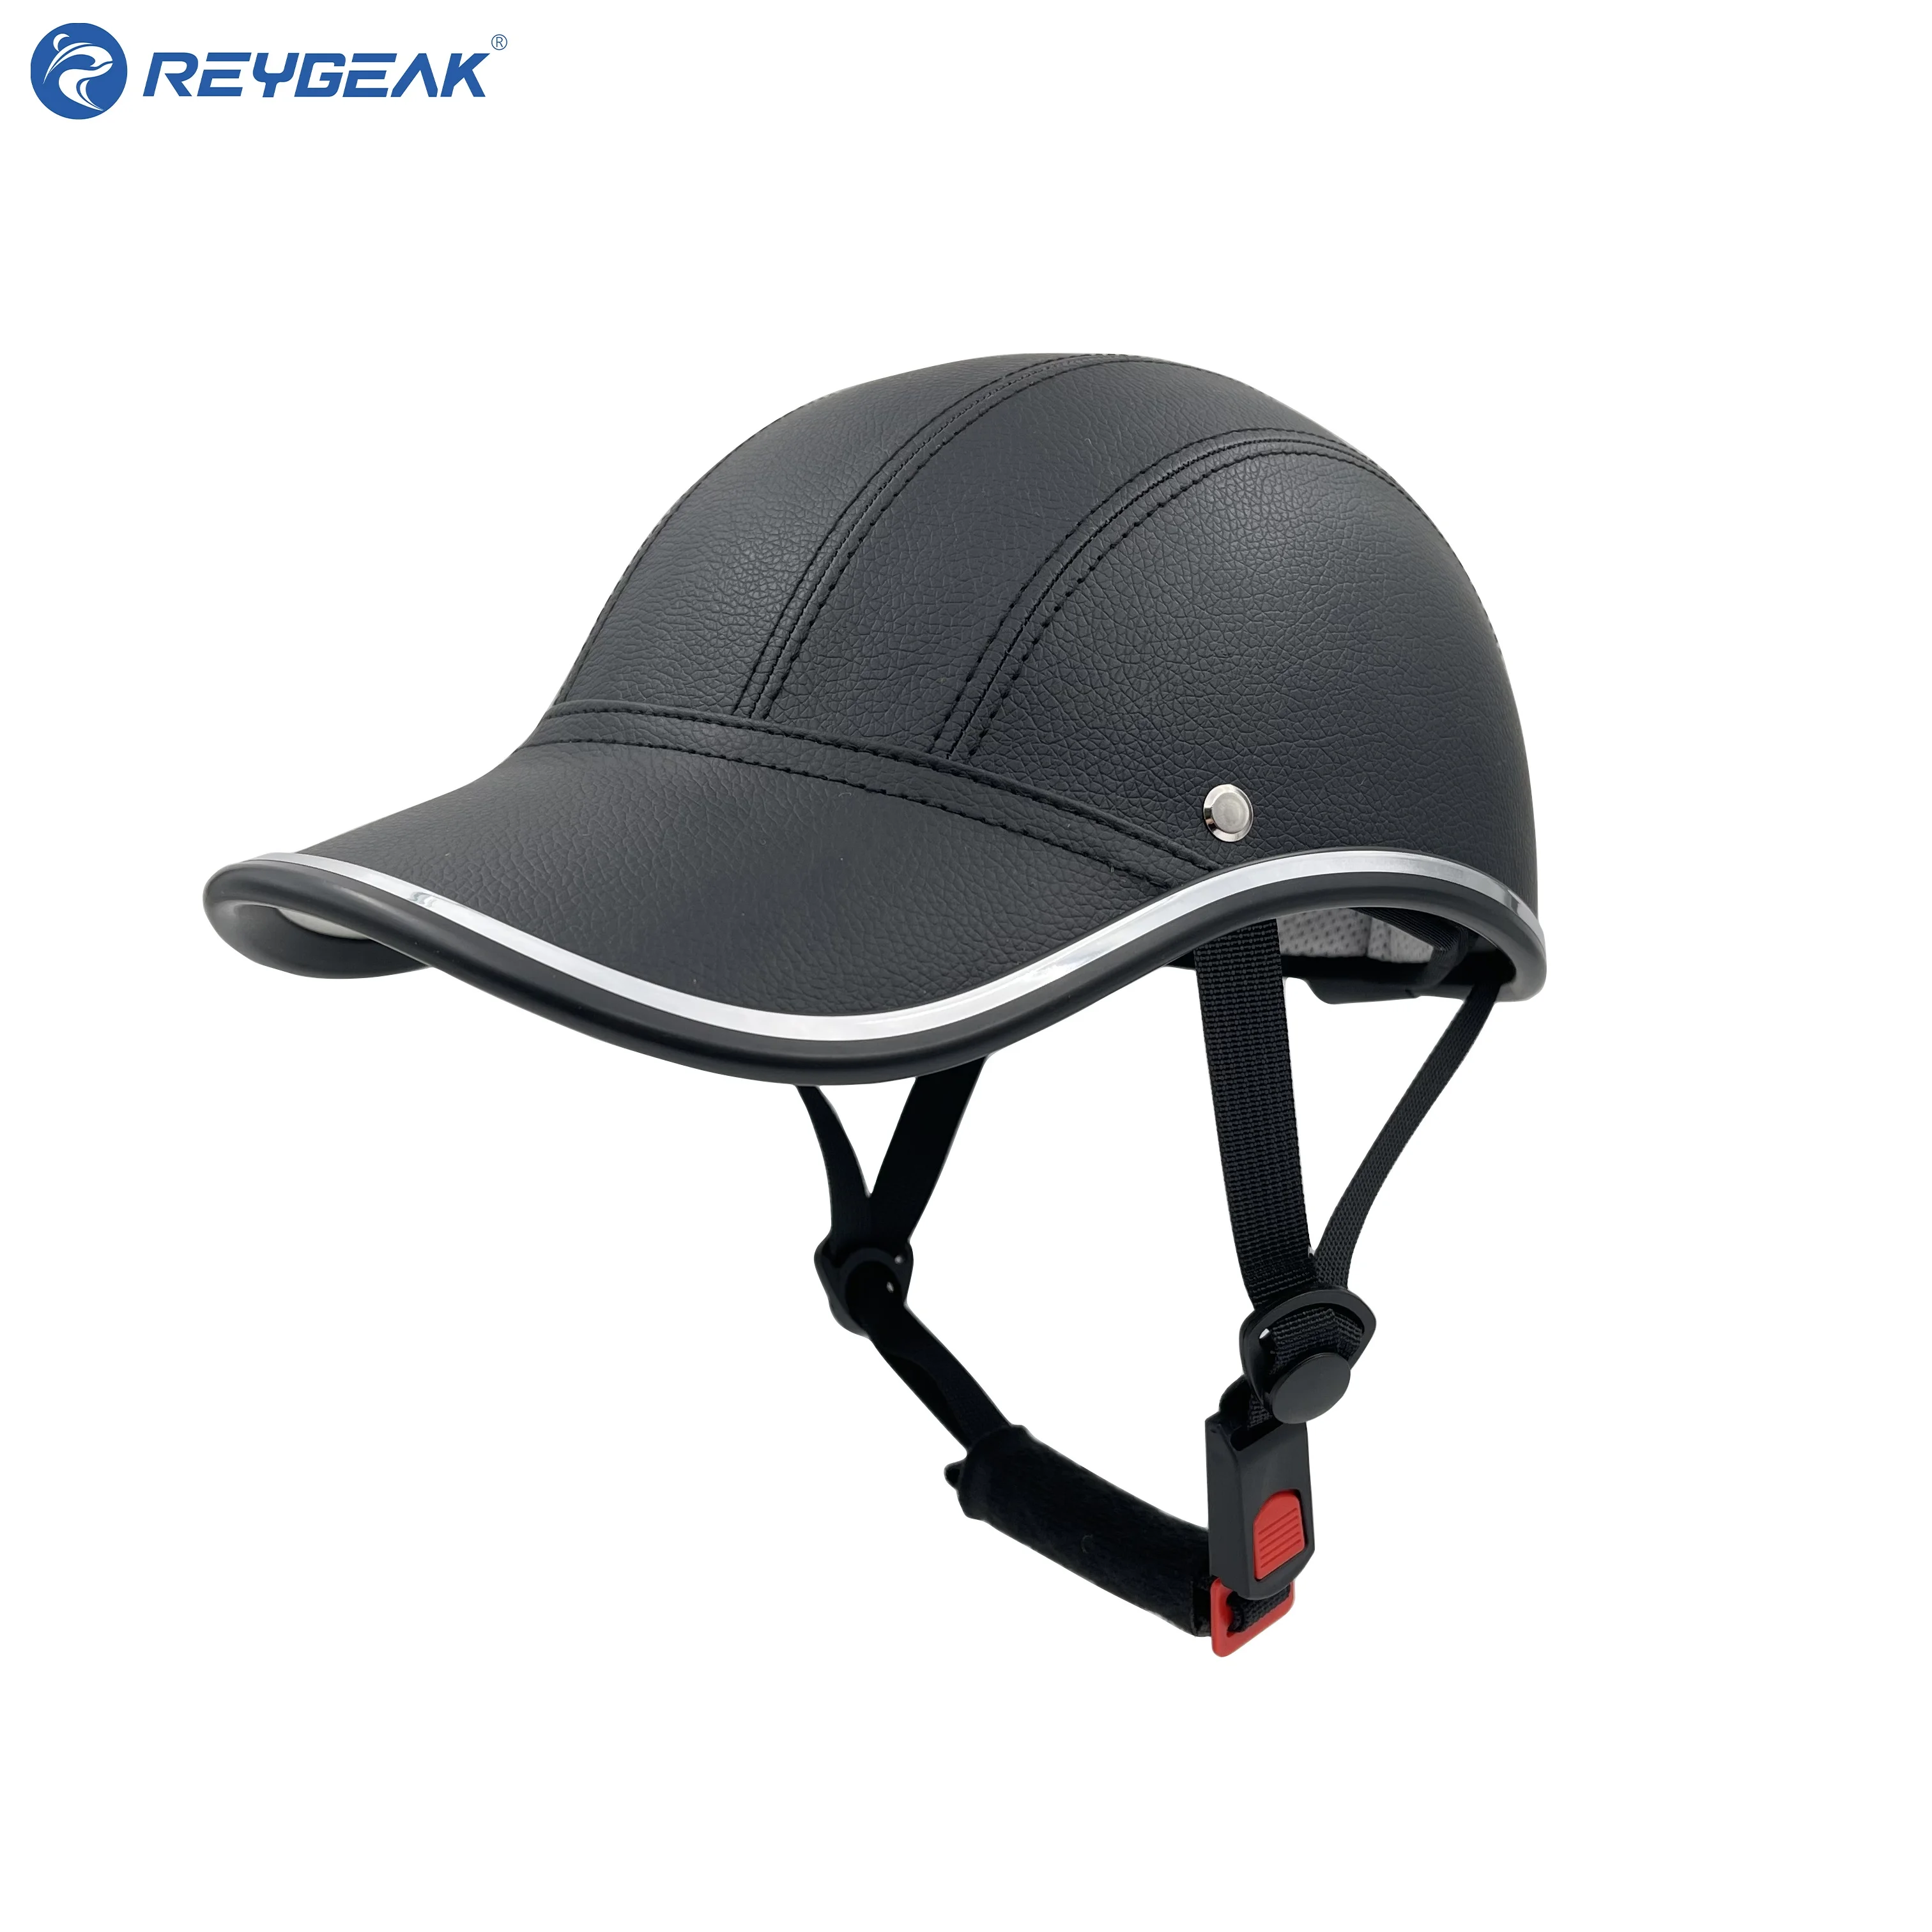 Adjustable Unisex Bike Cycling Helmet Baseball Cap Anti UV Safety